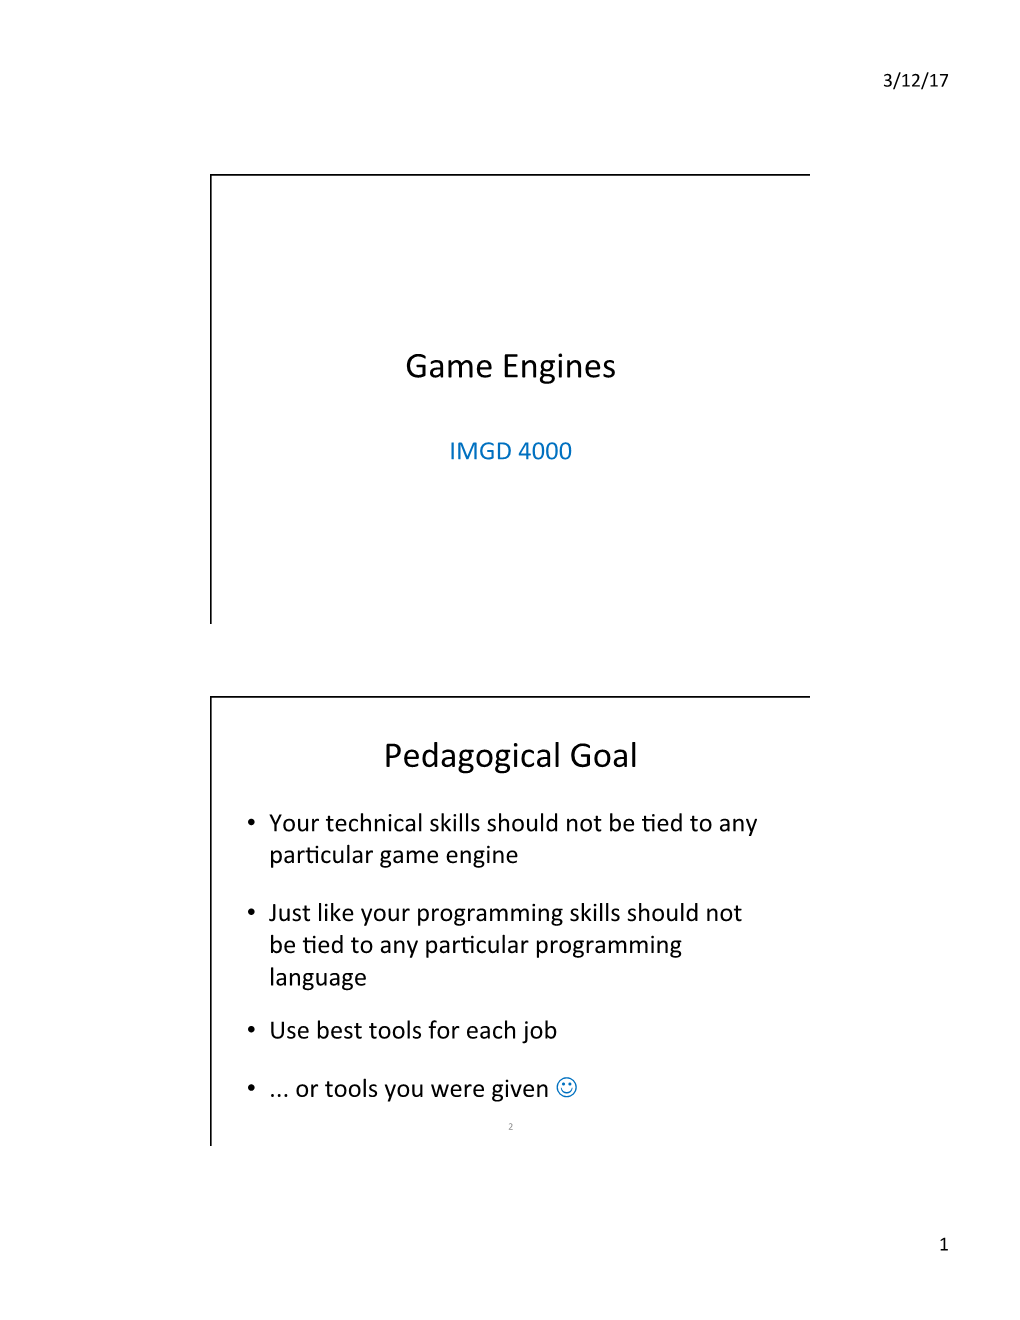 Game Engines Pedagogical Goal